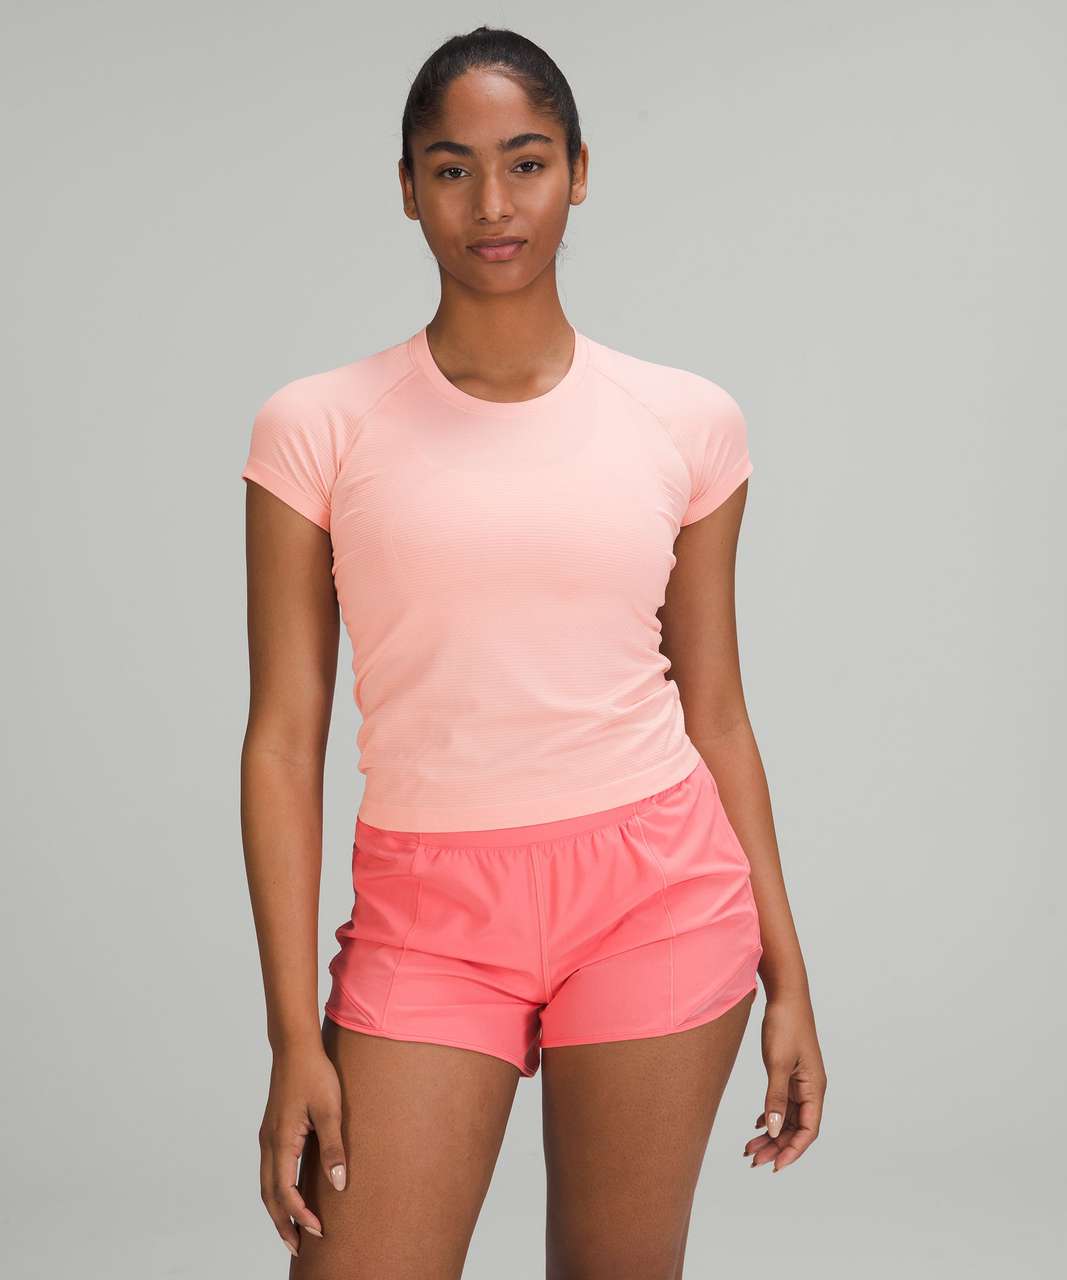 Lululemon Swiftly Tech Long Sleeve Shirt 2.0 - Pink Blossom / Pink